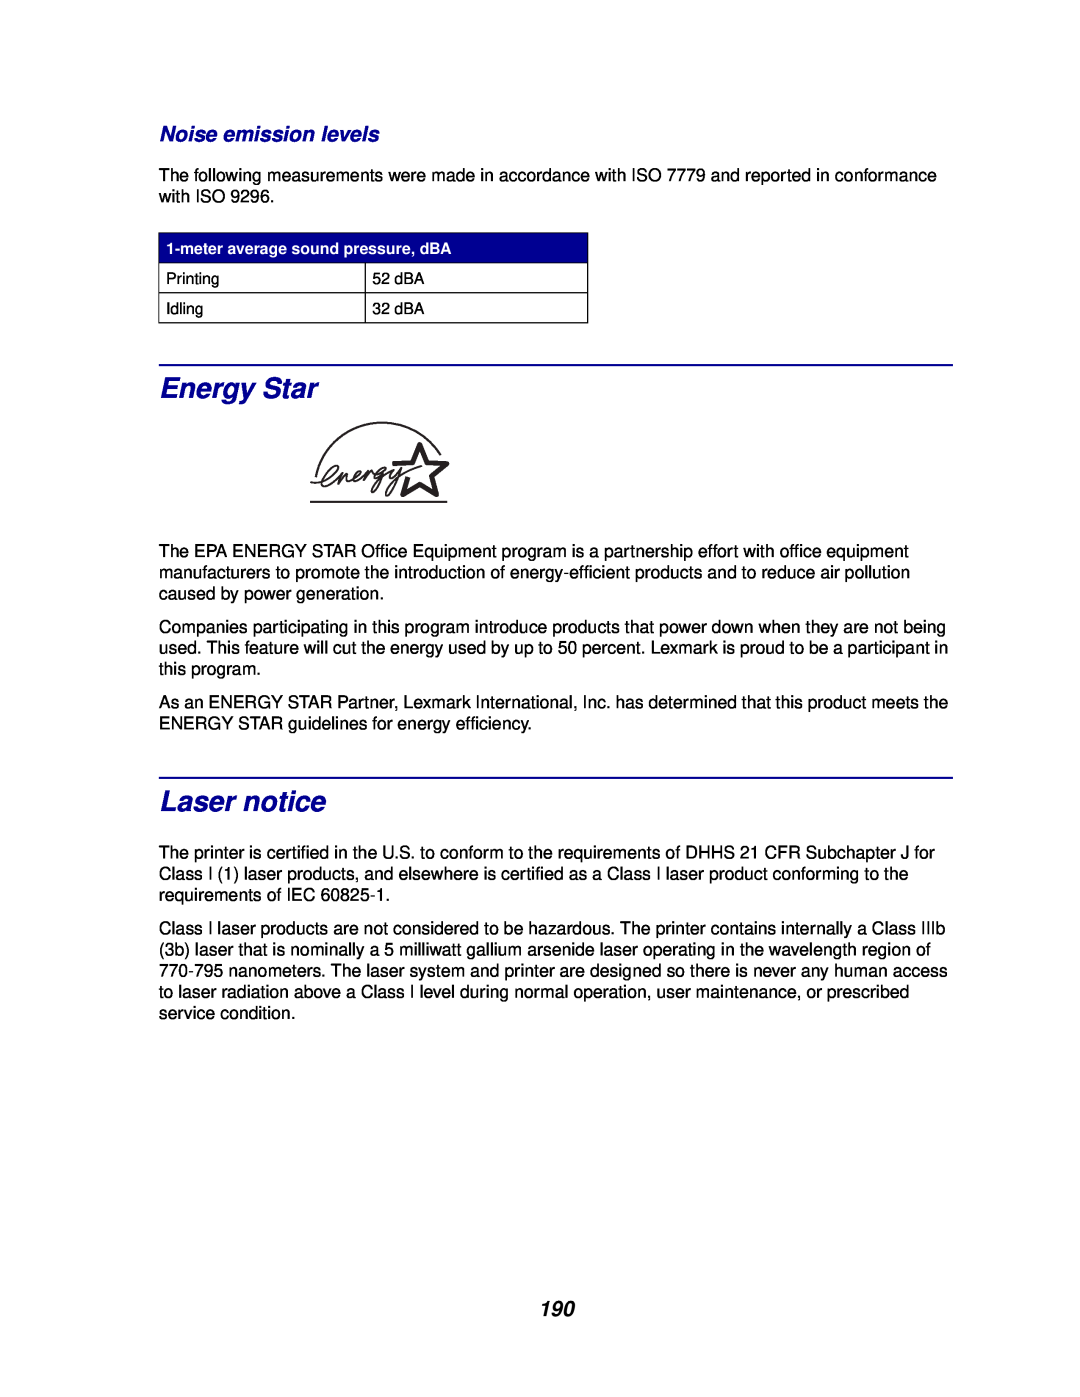 Lexmark 812 manual Energy Star, Laser notice, Noise emission levels 